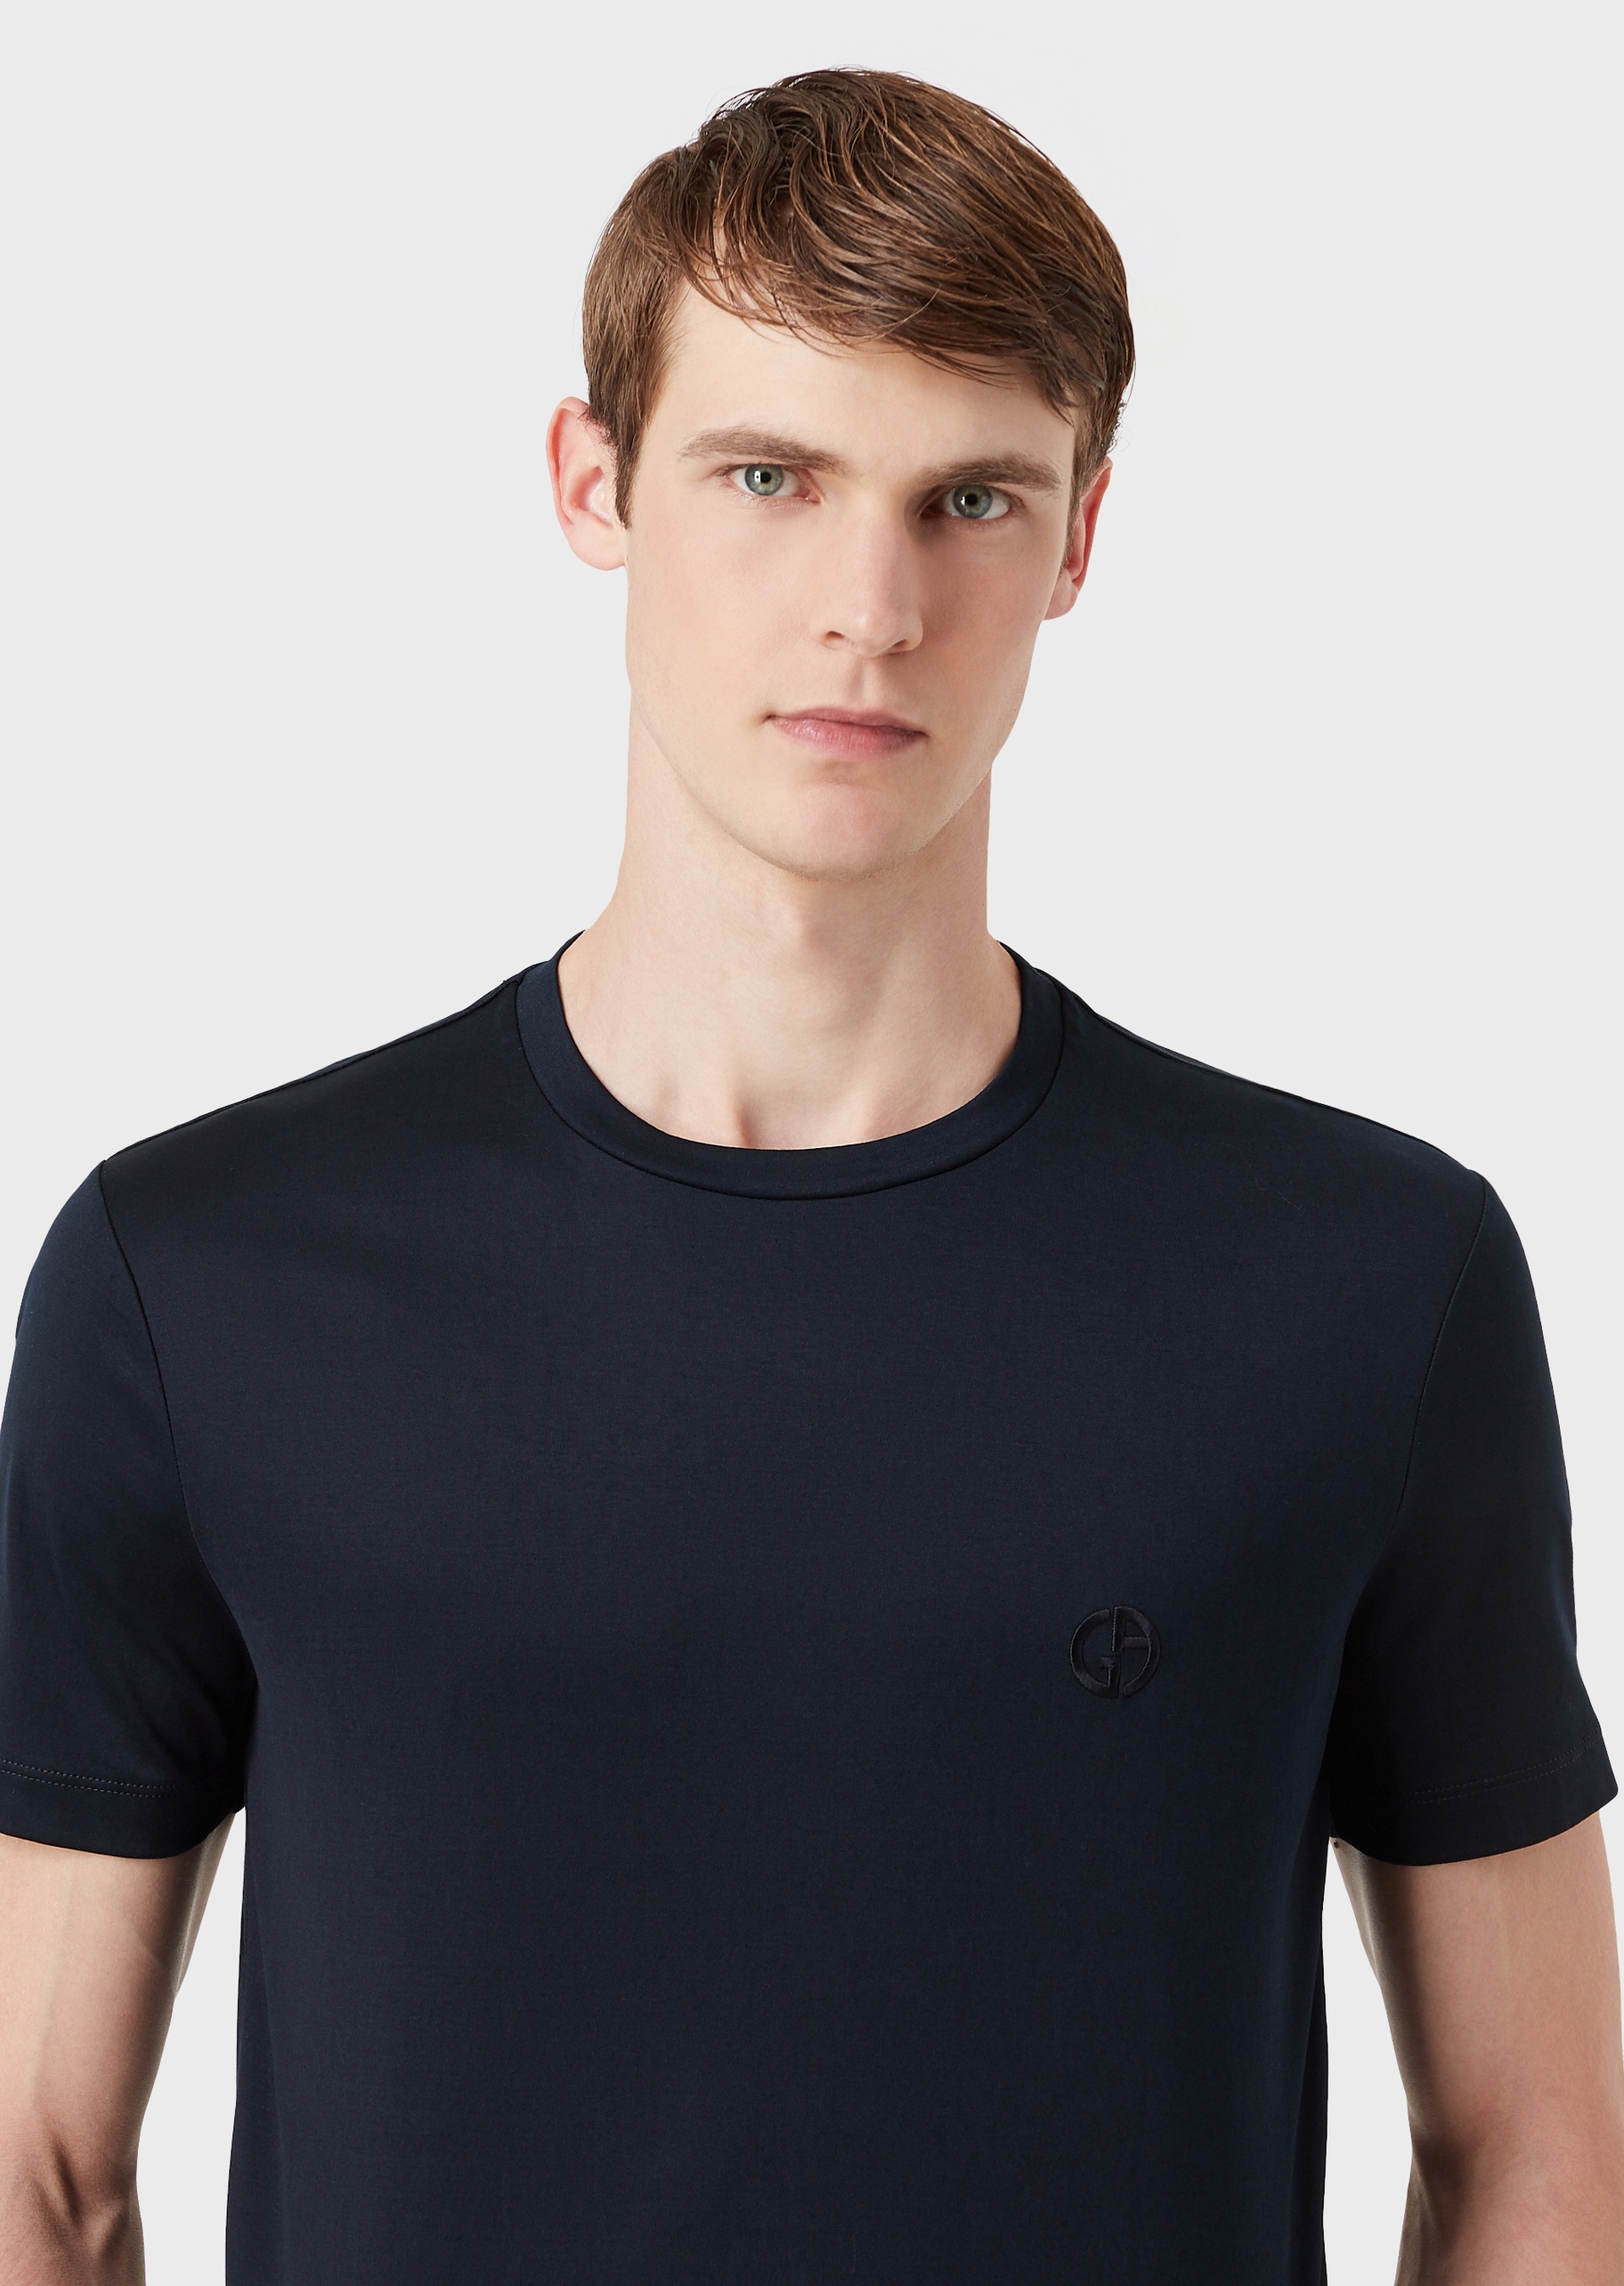 Giorgio Armani 男士全棉合身短袖圆领单色徽标刺绣T恤